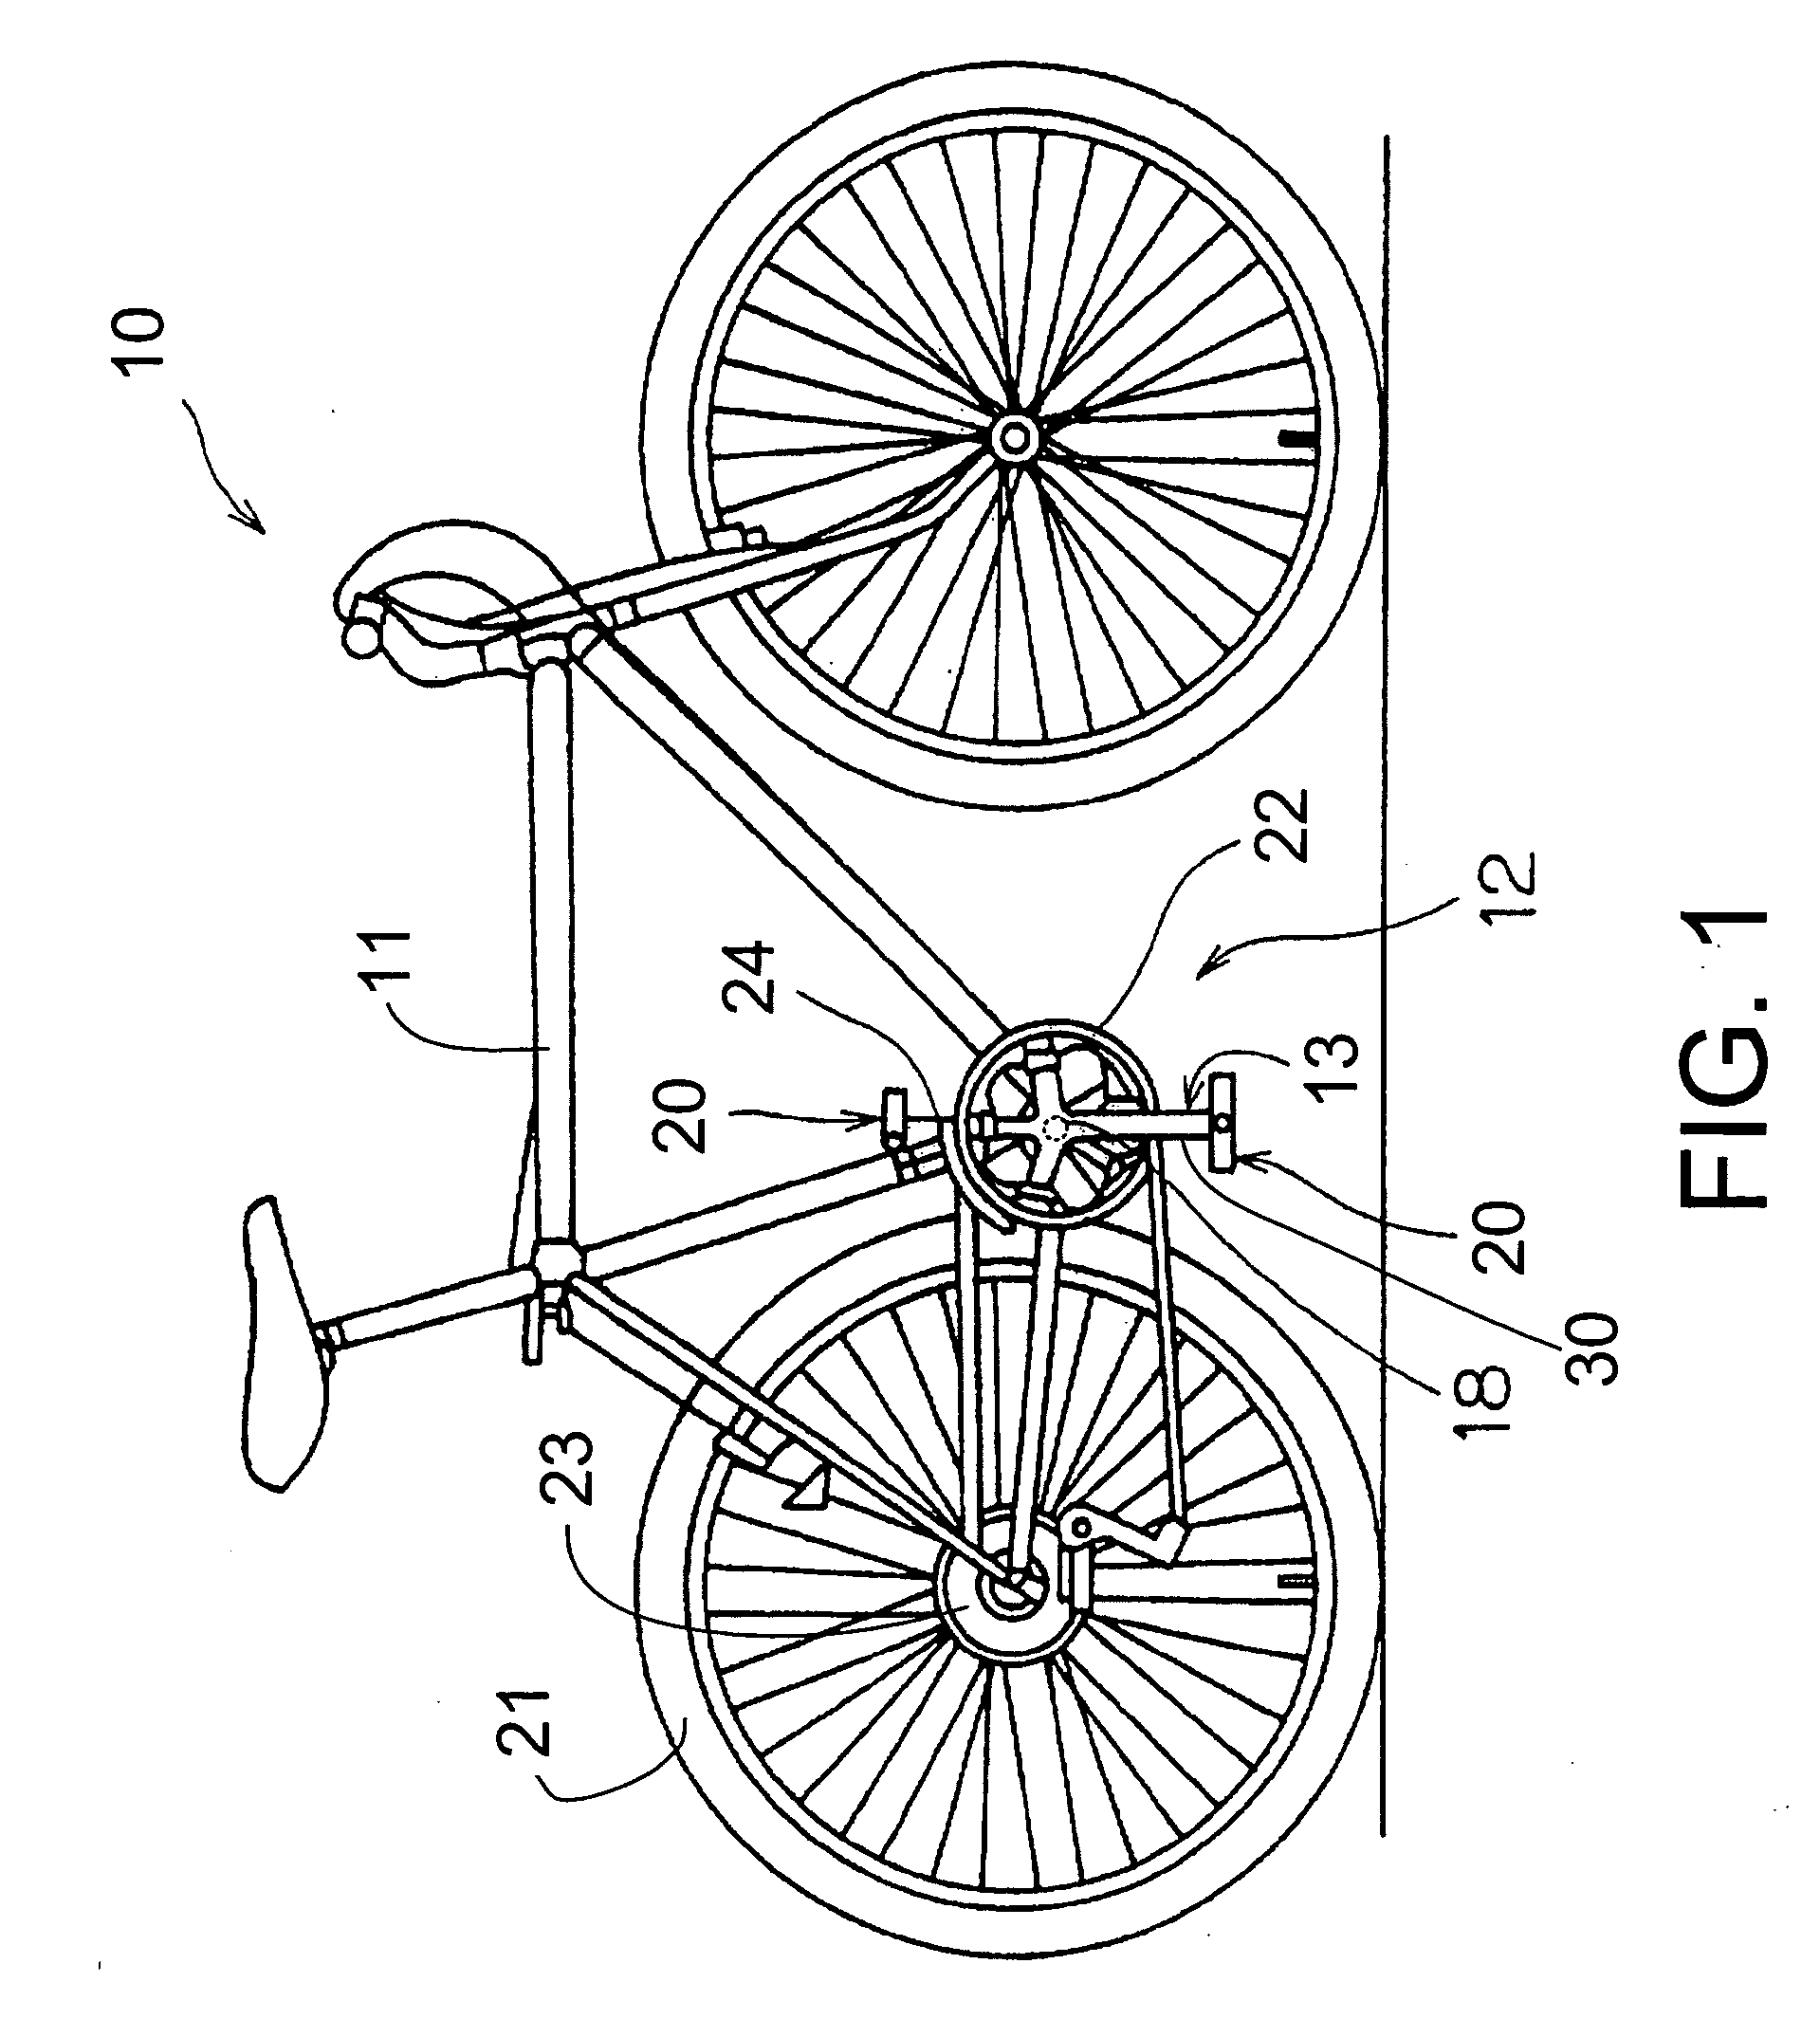 Bicycle crankset